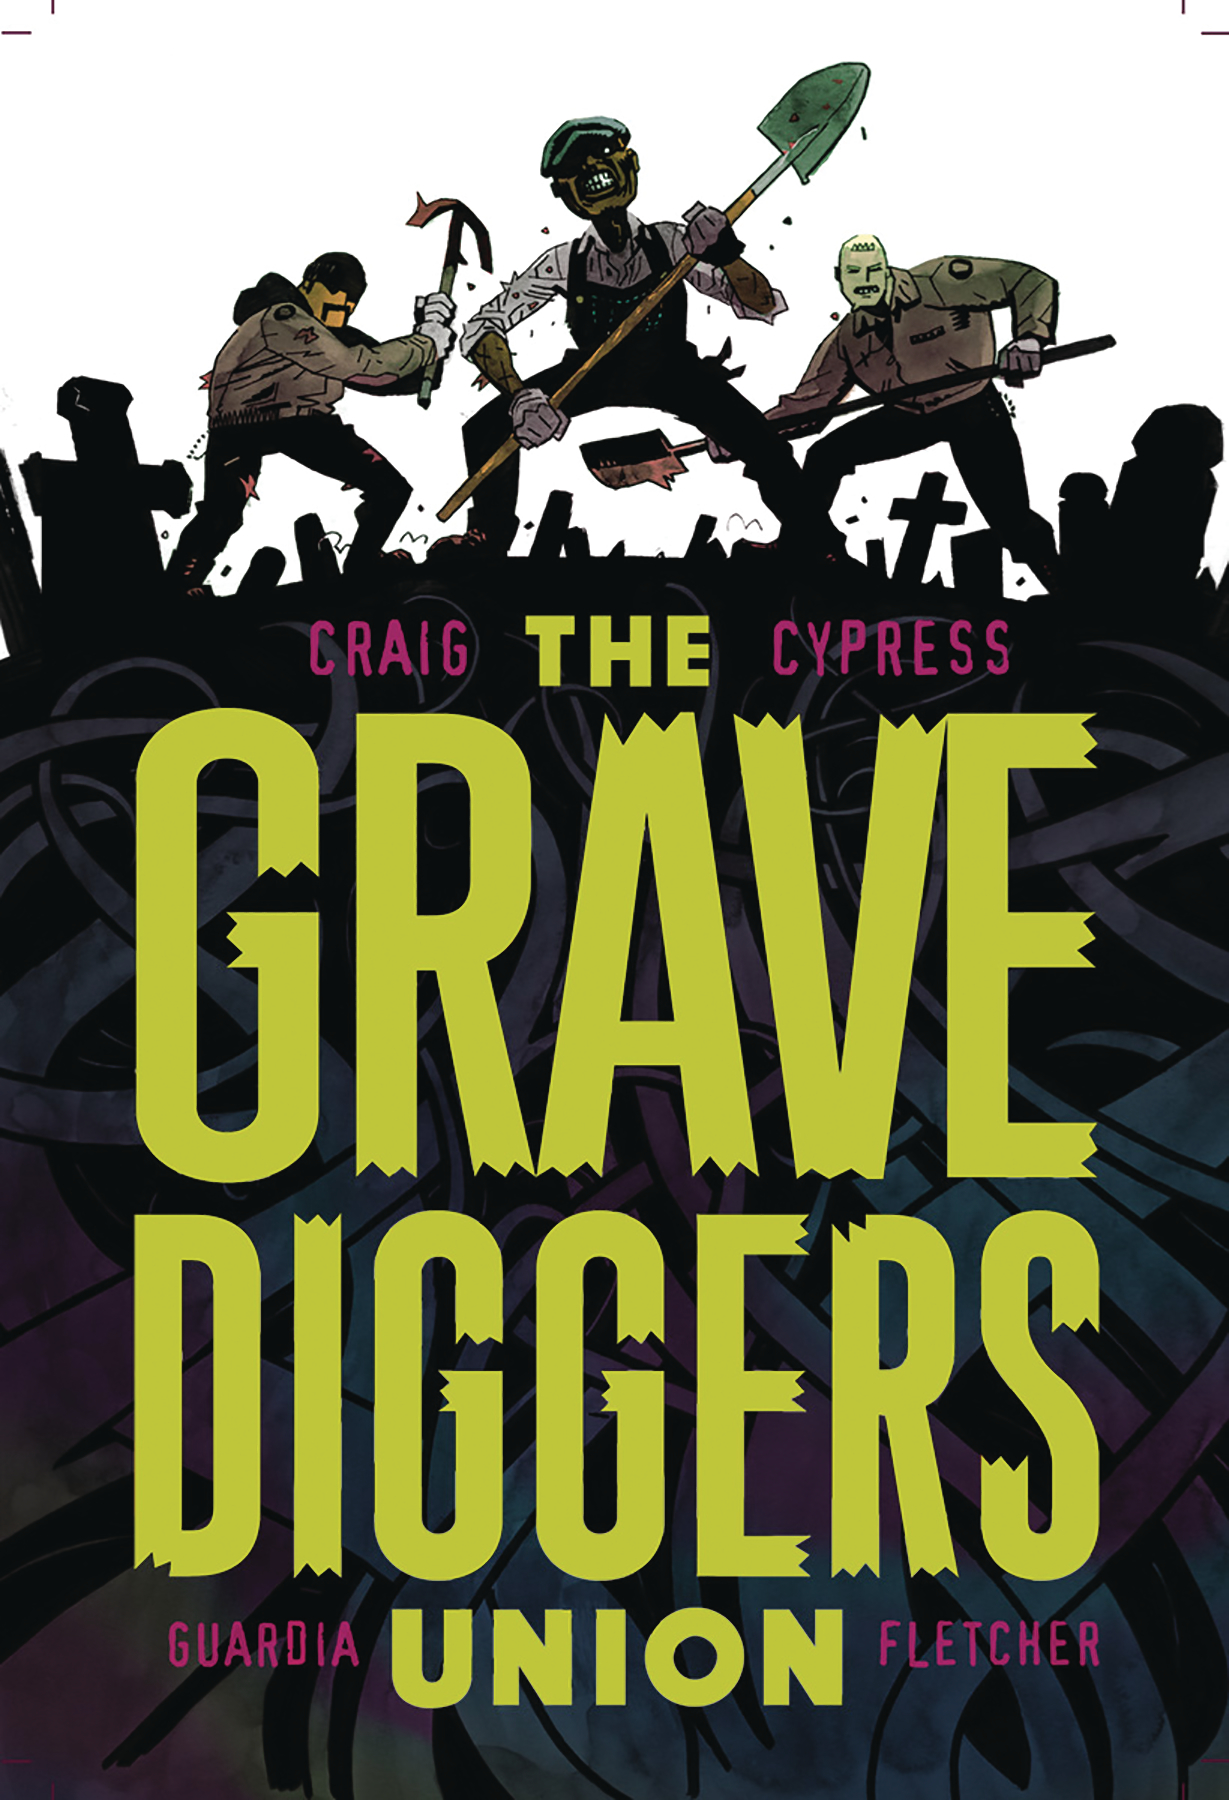 Gravediggers Union Graphic Novel Volume 1 (Mature)